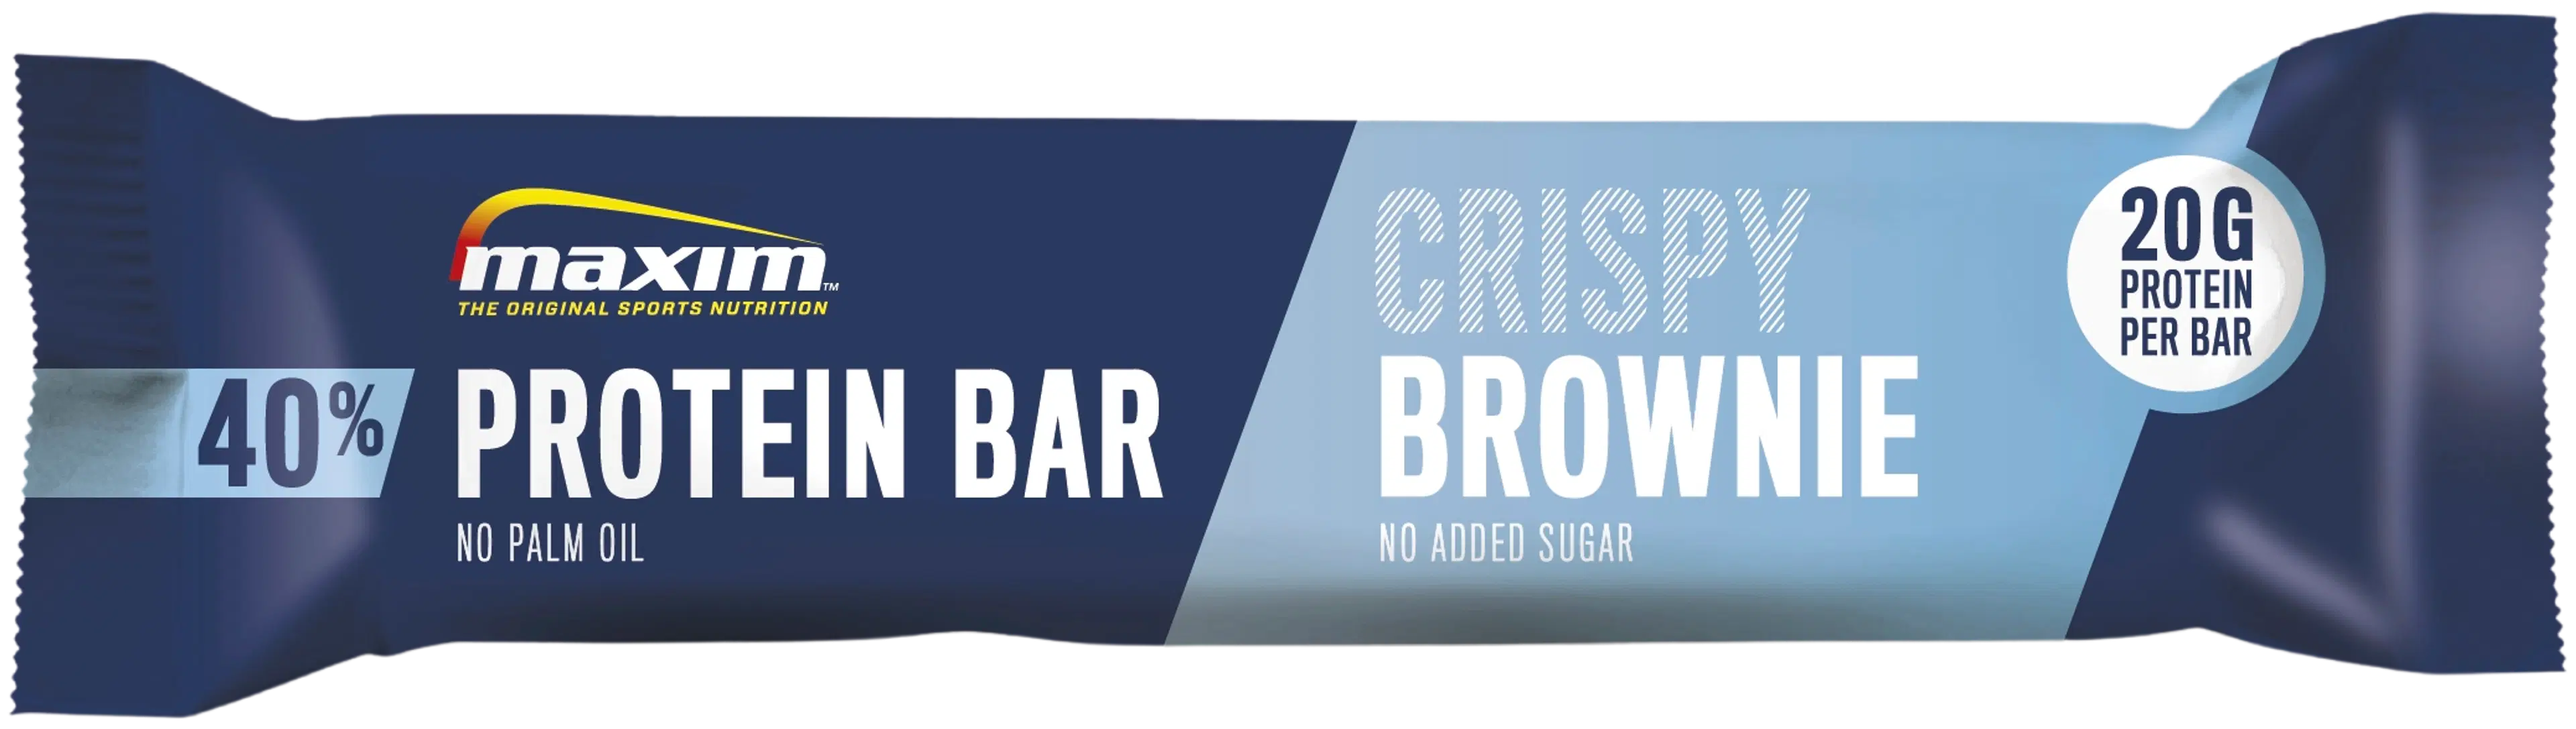 Maxim Crispy Brownie 40% Protein Bar Crispy Brownie proteiinipatukka 50g